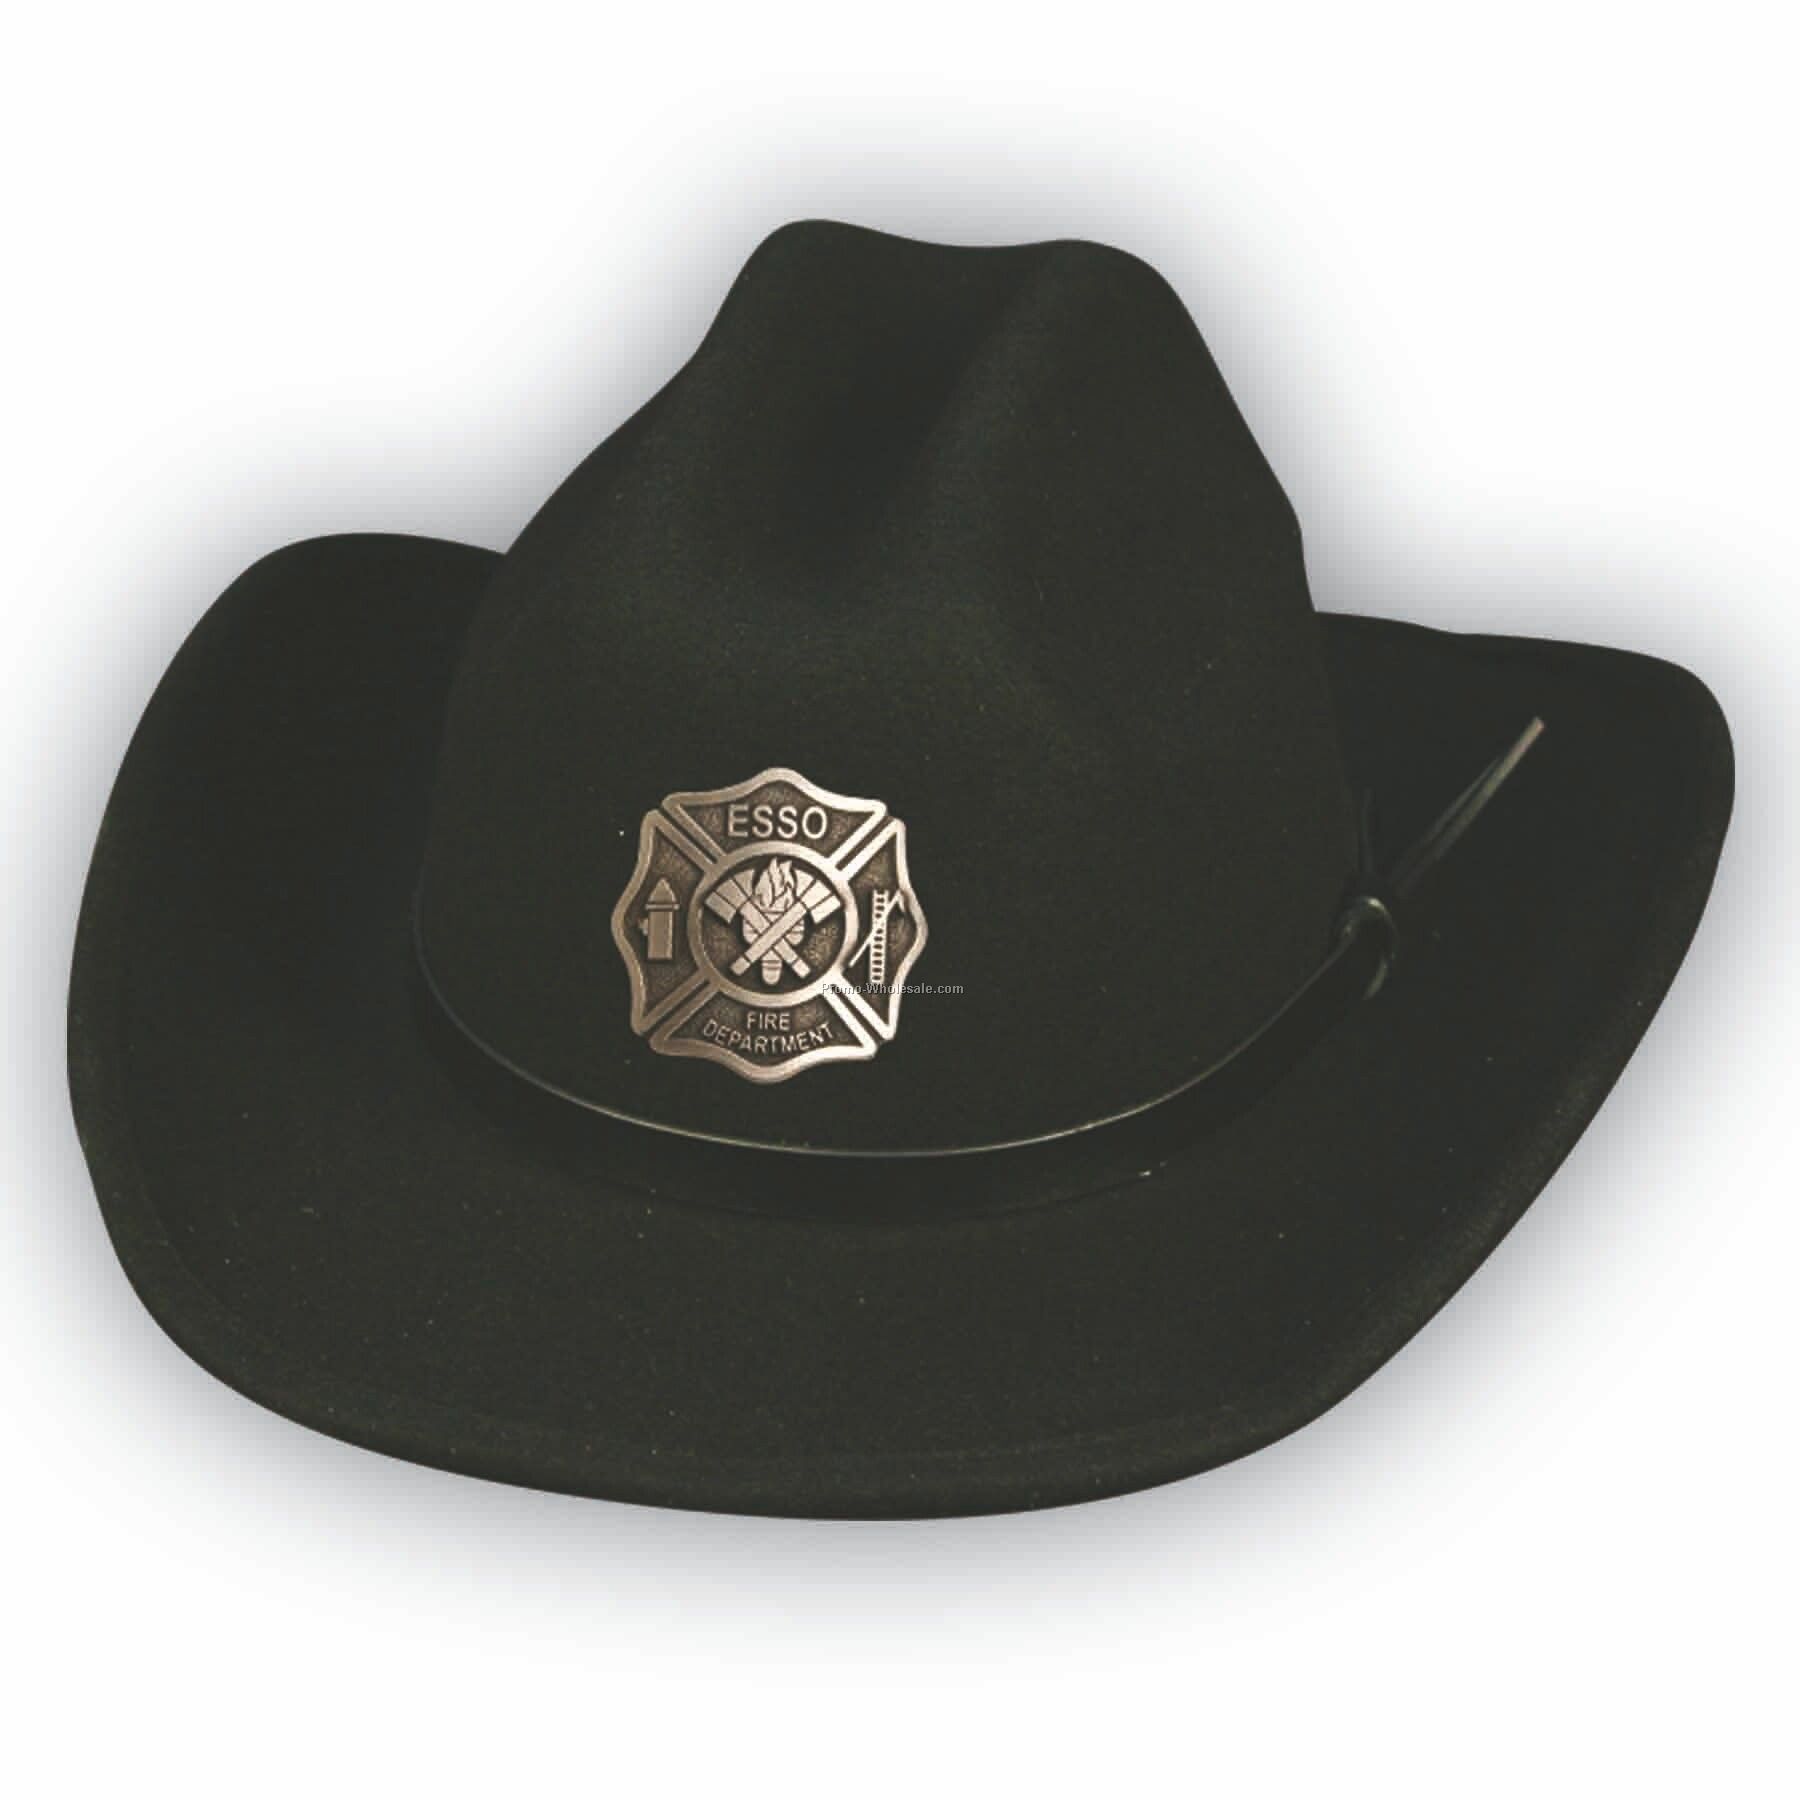 Felt Cowboy Hat W/ Imitation Leather Band (Pewter Emblem)